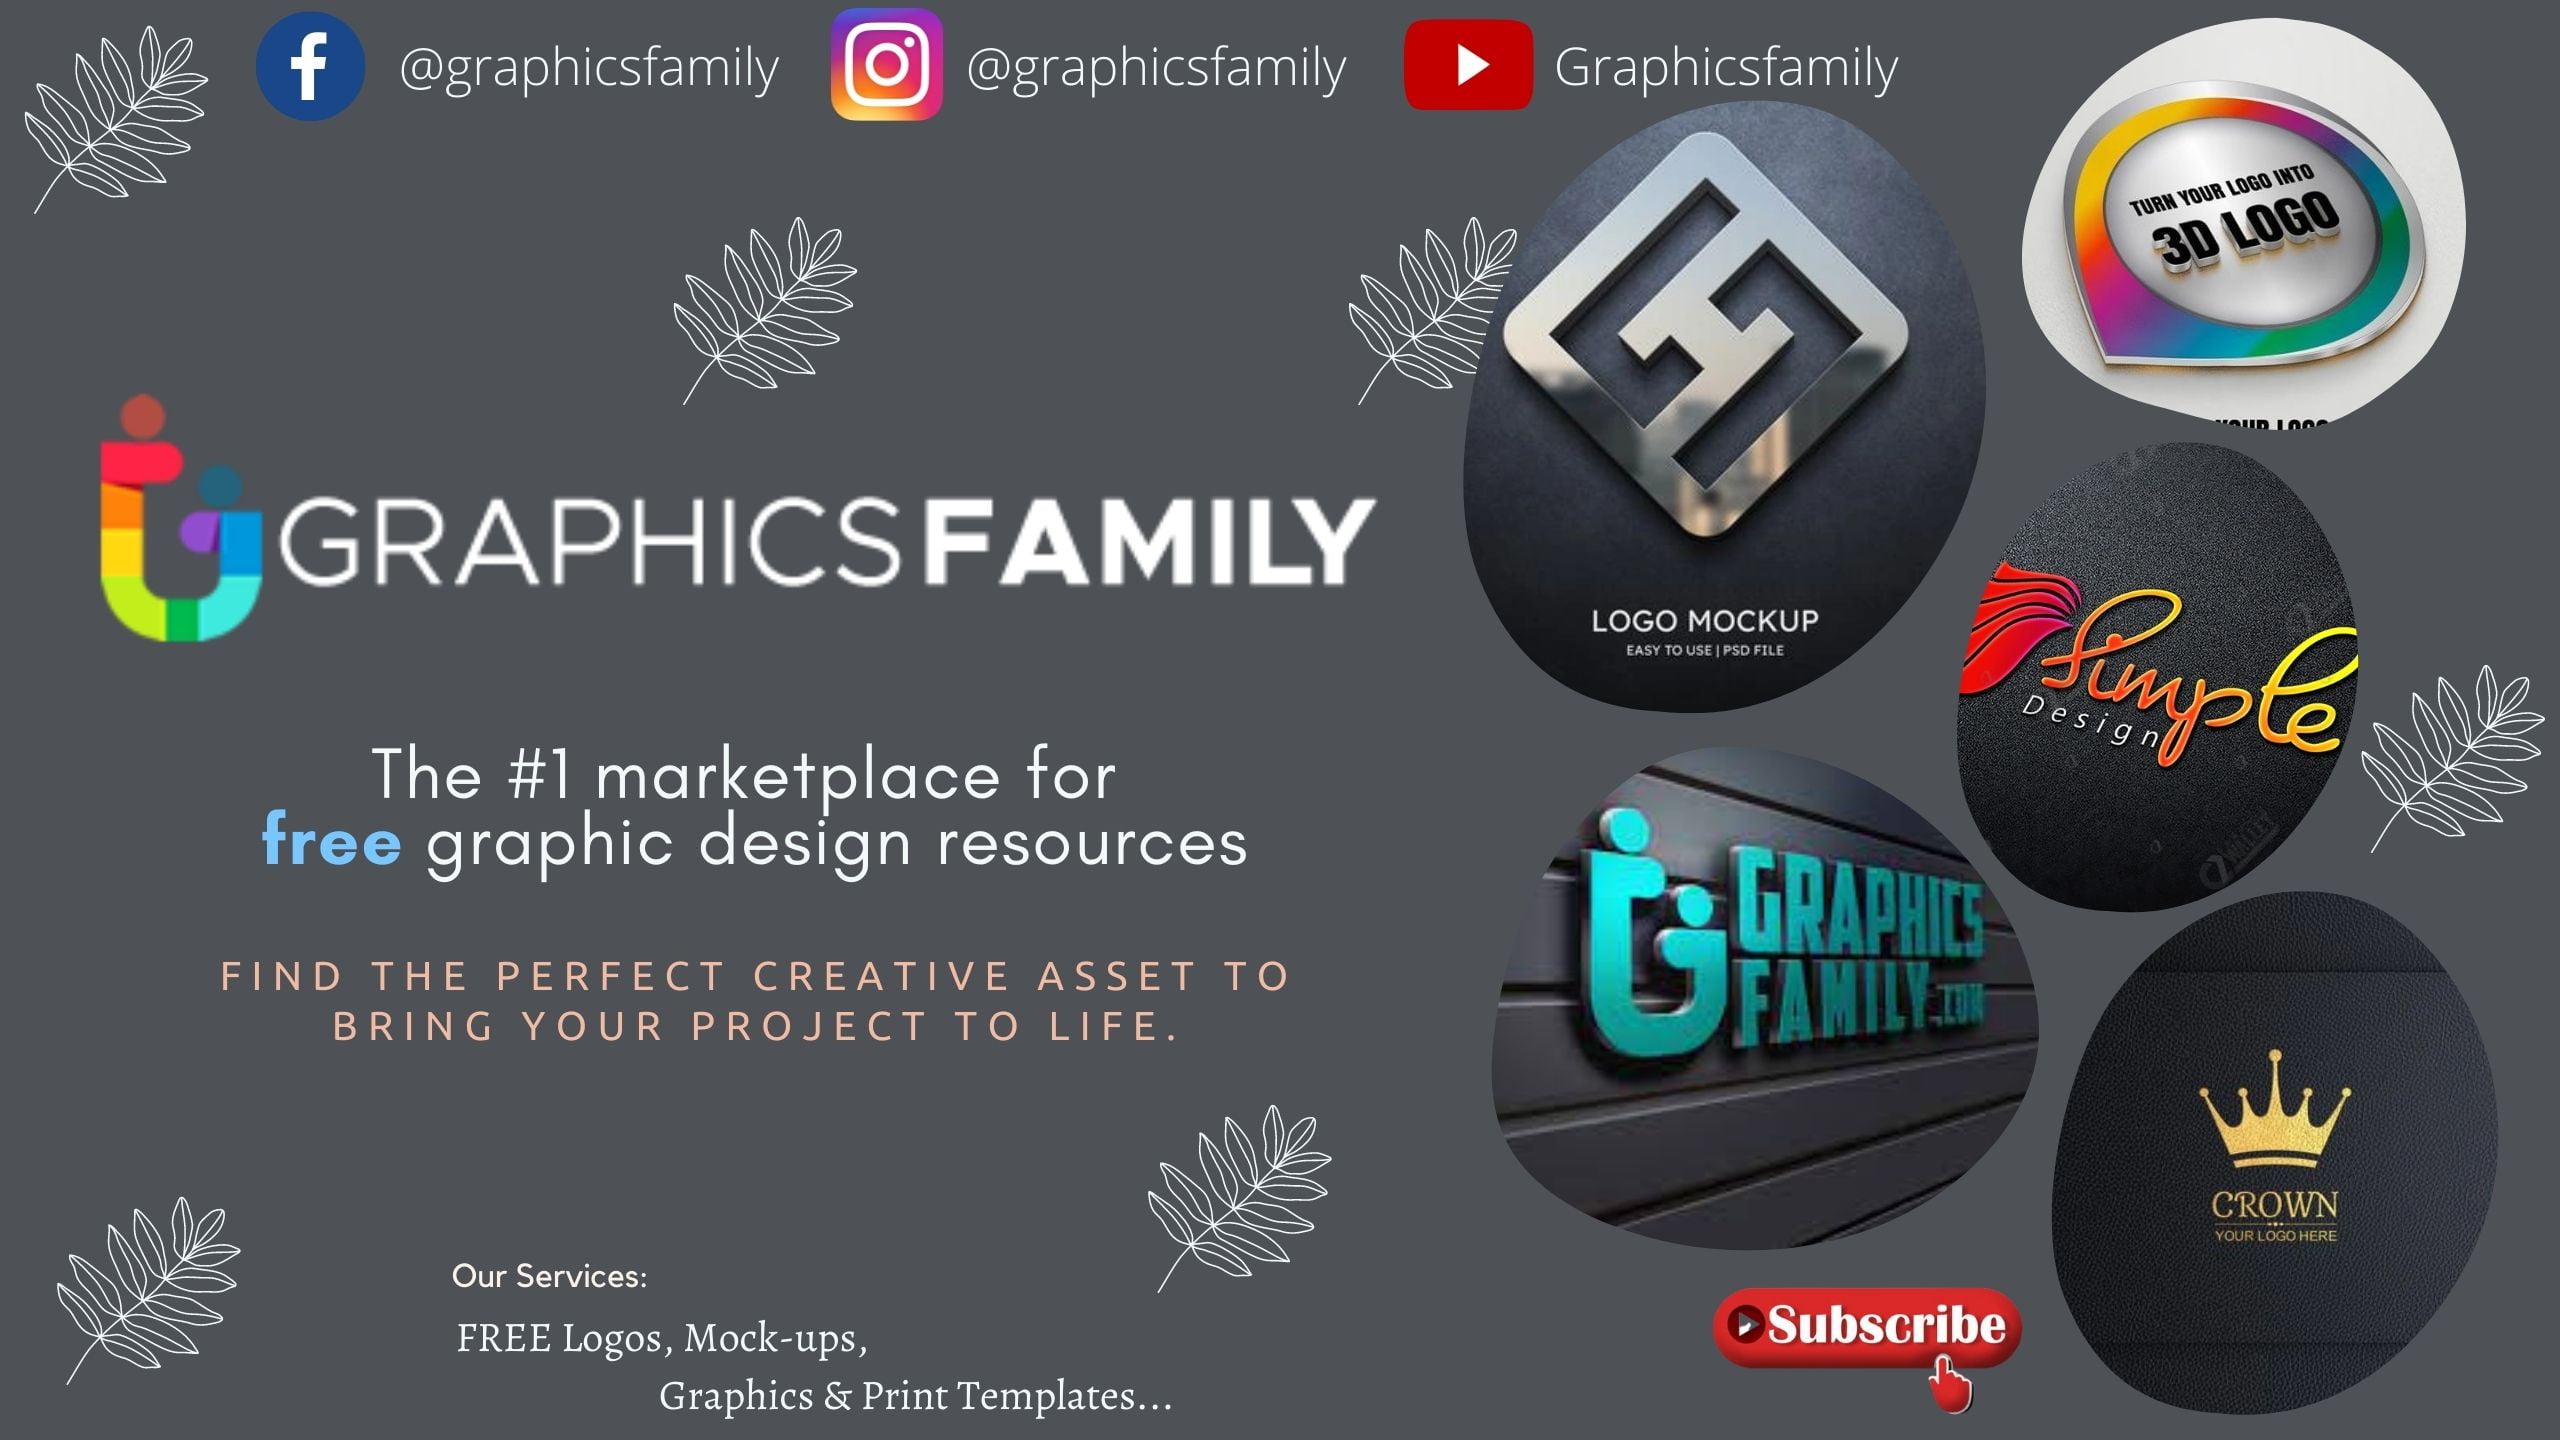 Graphicsfamily Design 4